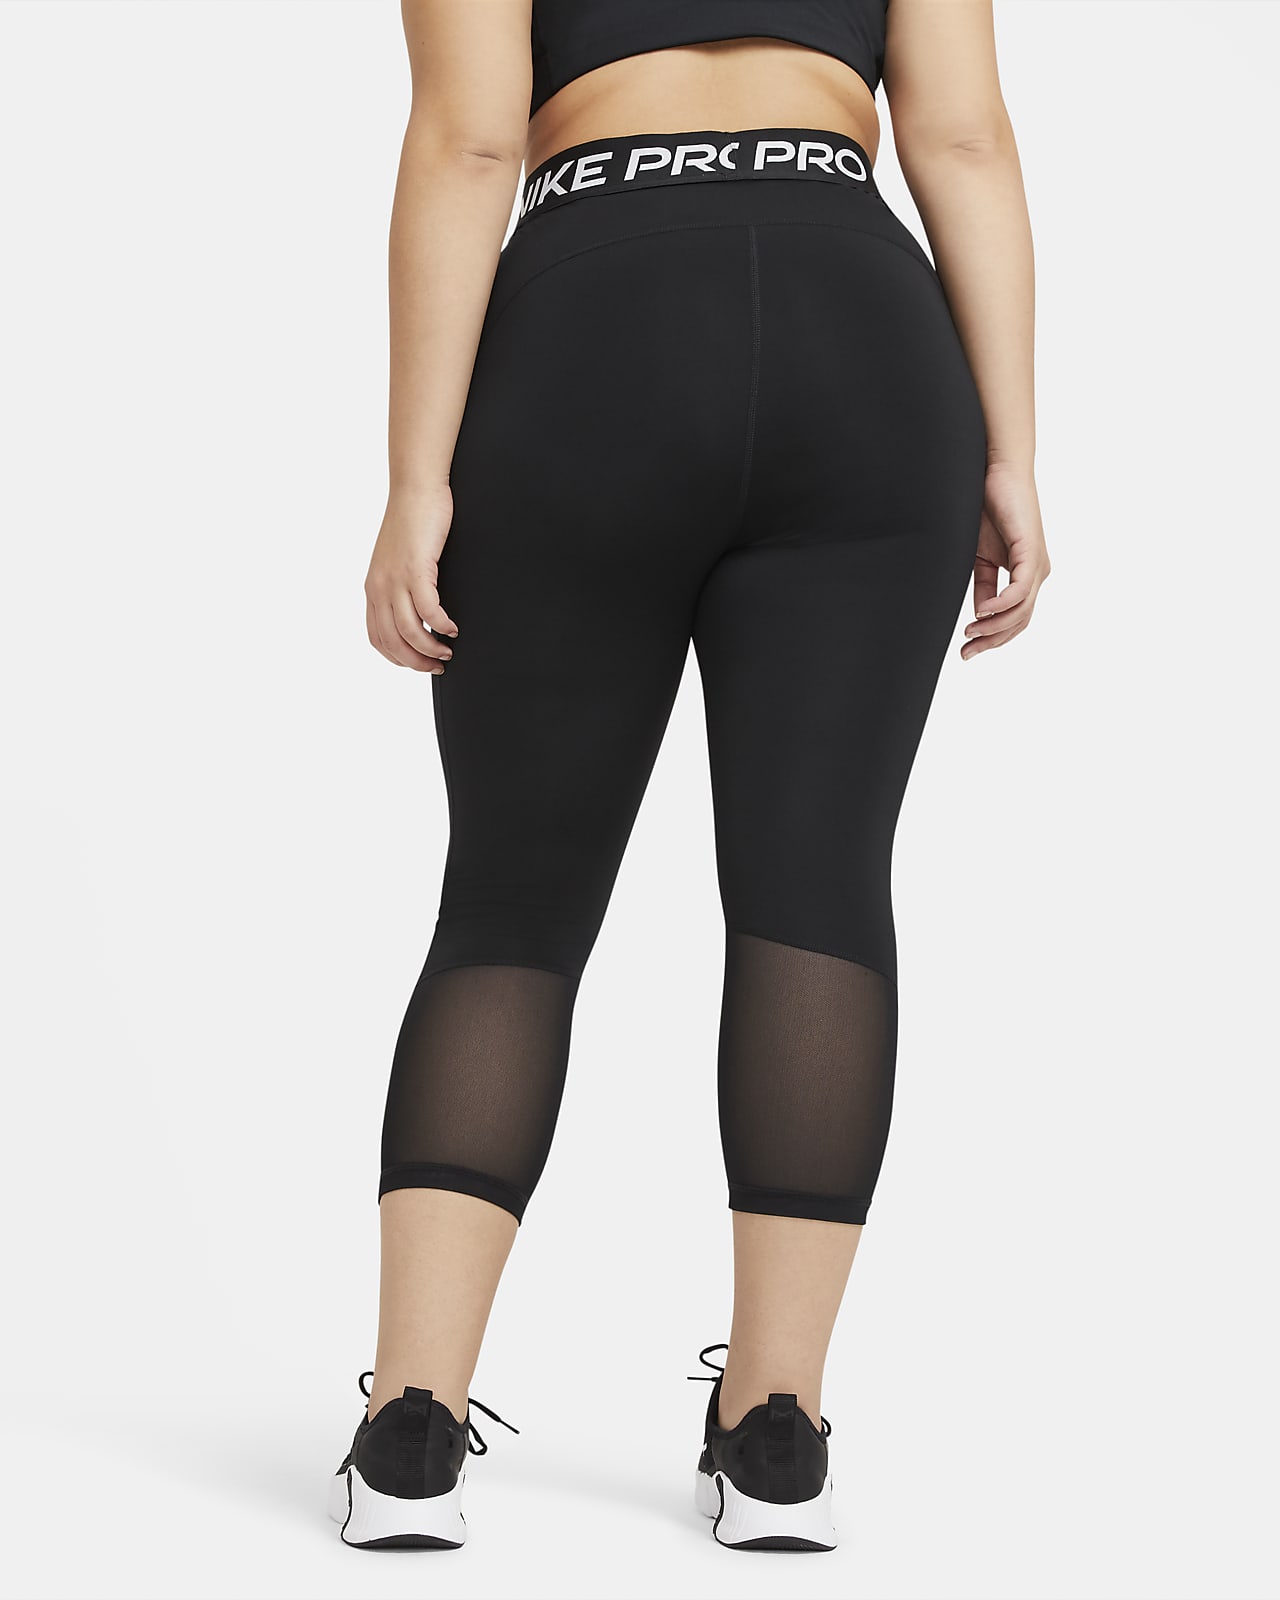 Women's Plus Size Pants & Tights. Nike.com  Nike pro women, Nike pros,  Womens active wear outfits